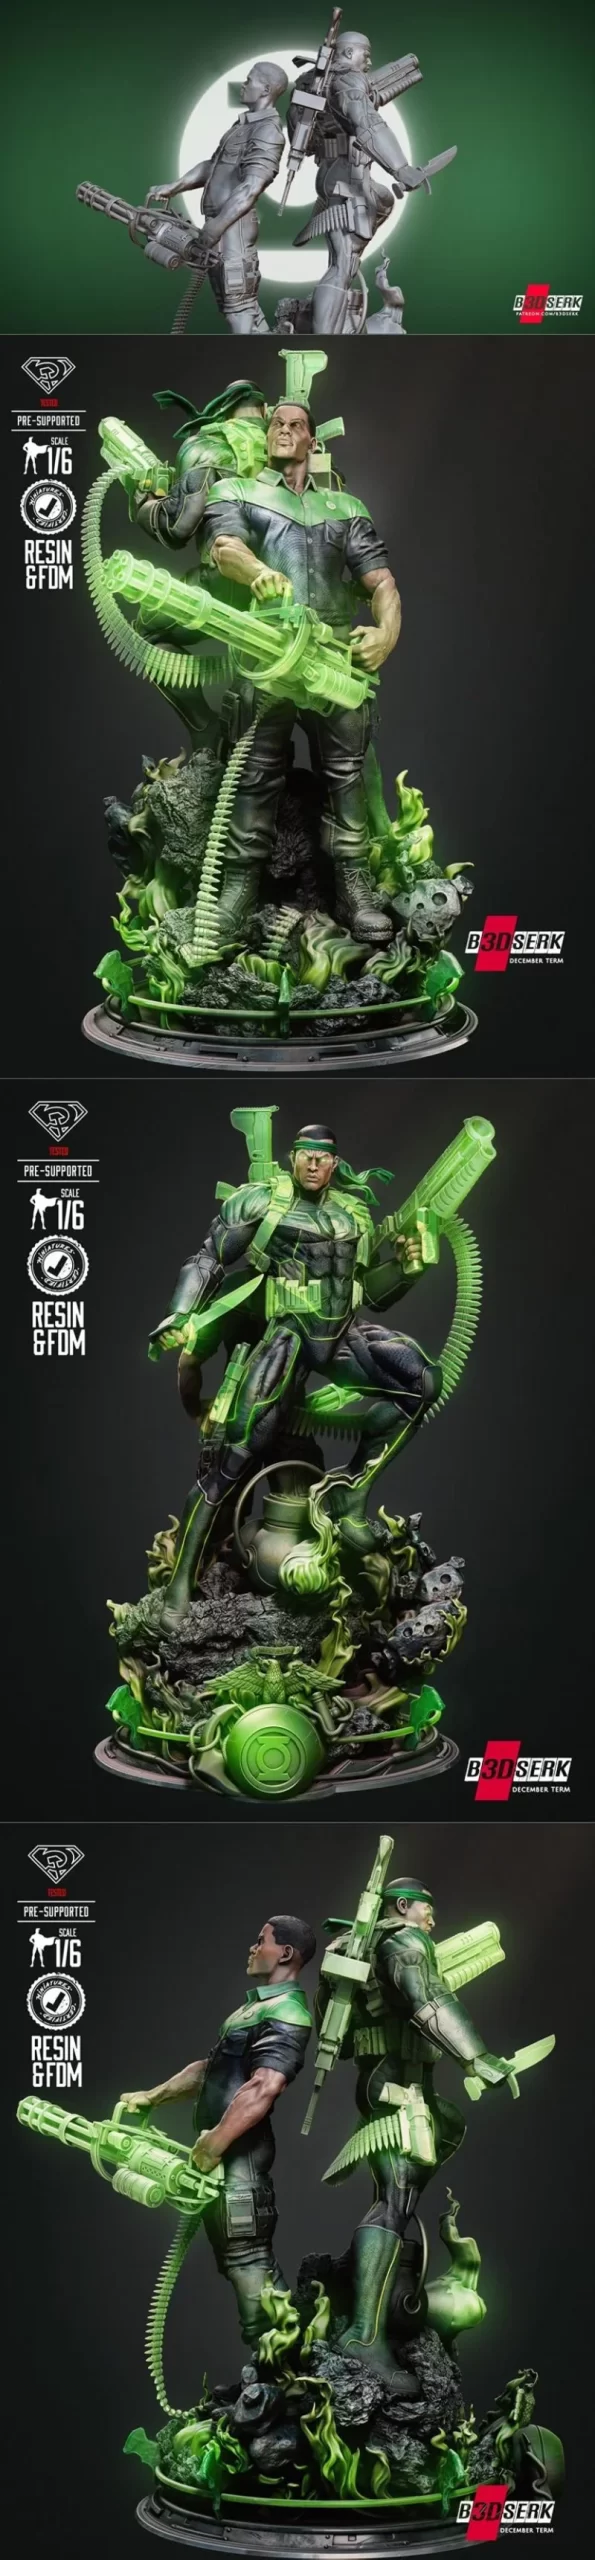 Jhon Stewart - Green Lantern